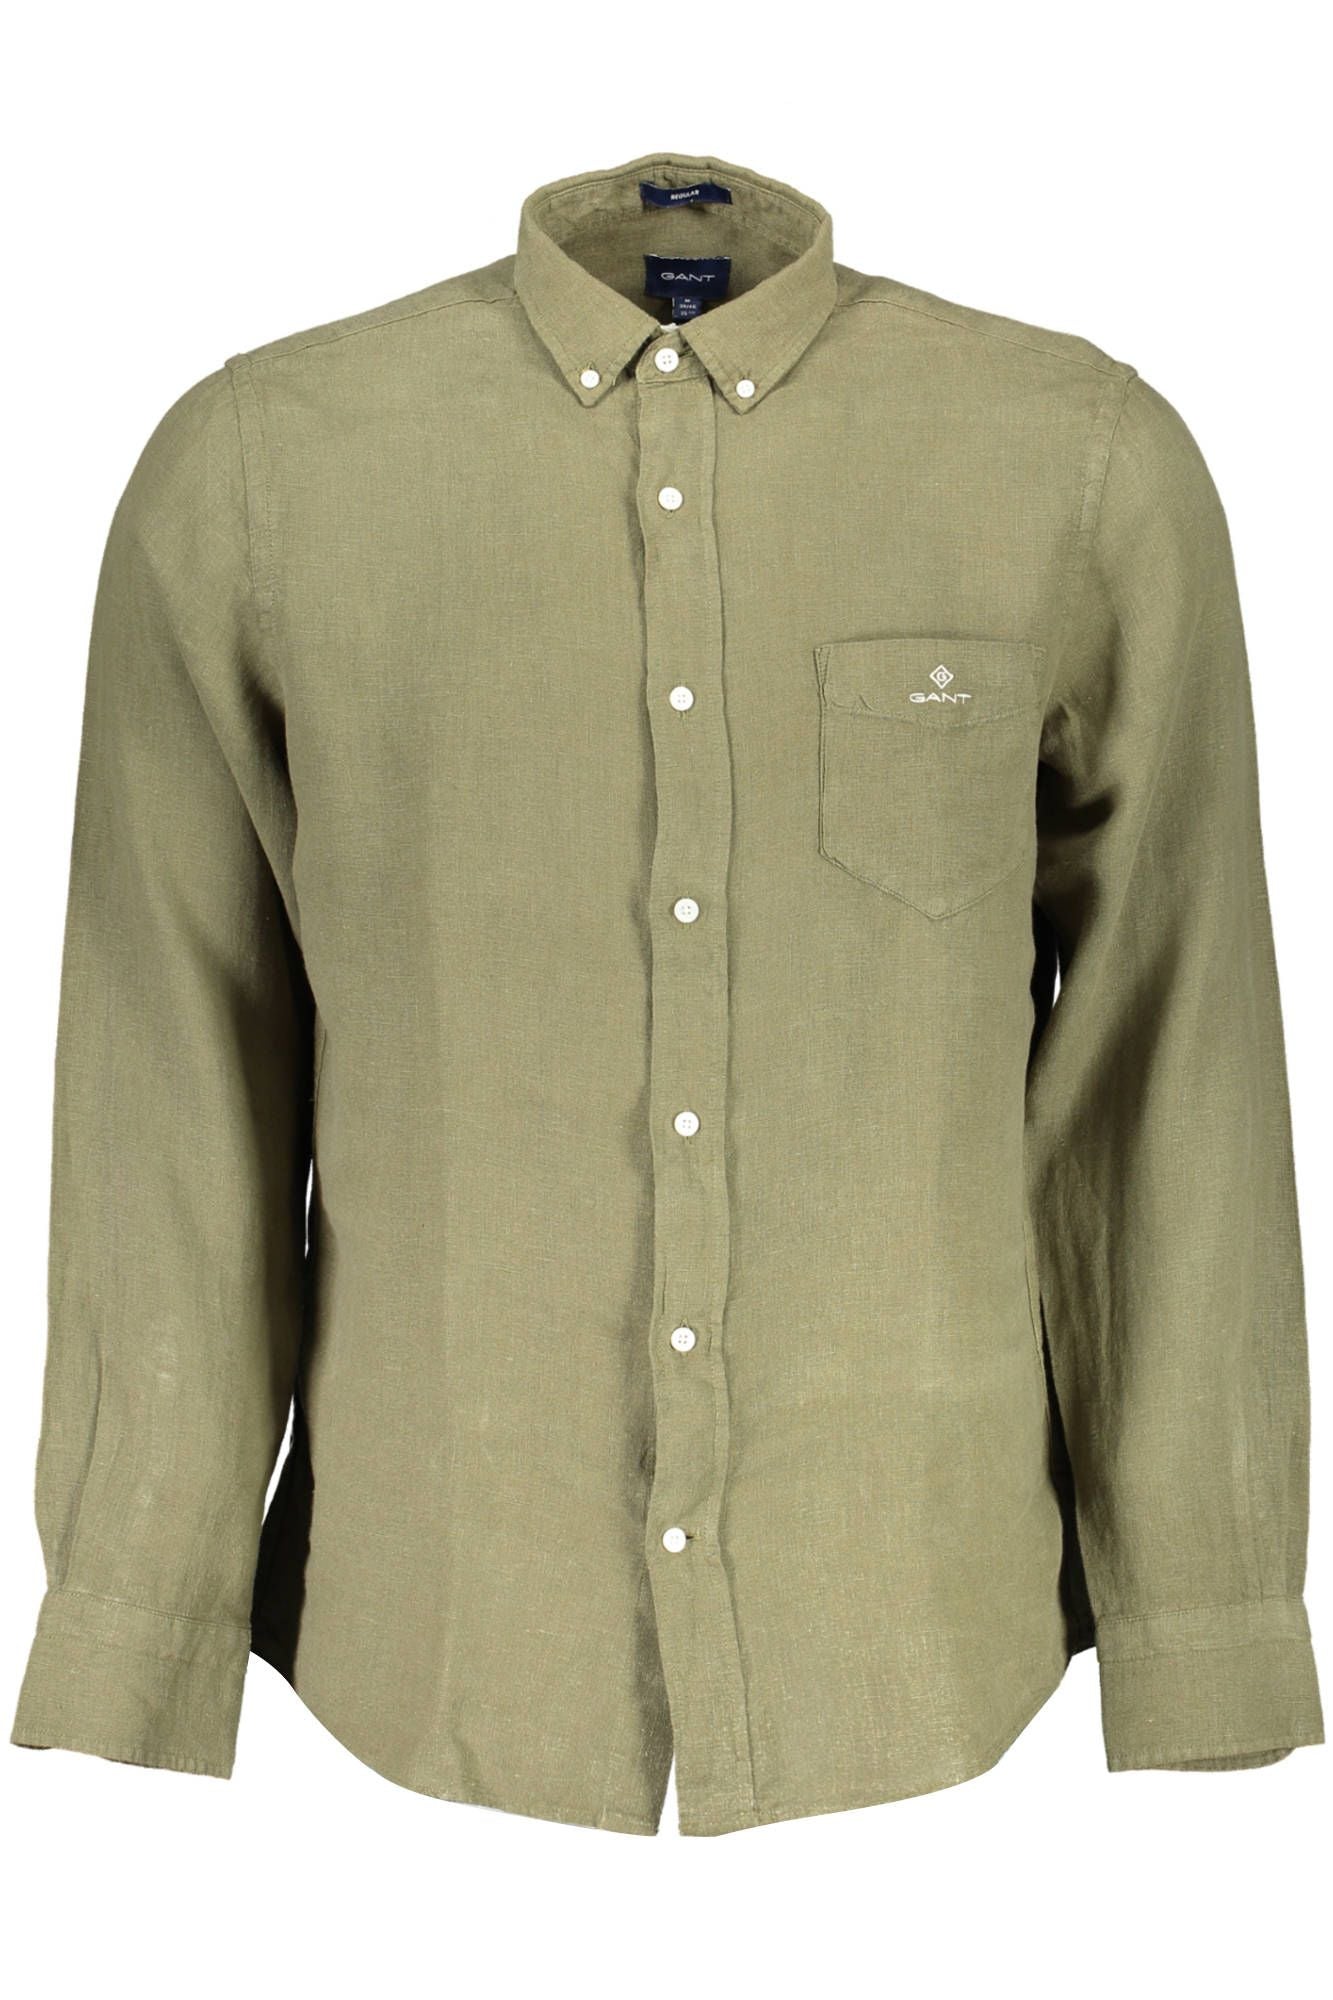 Gant – Sommergrünes, kurzärmliges Leinenhemd